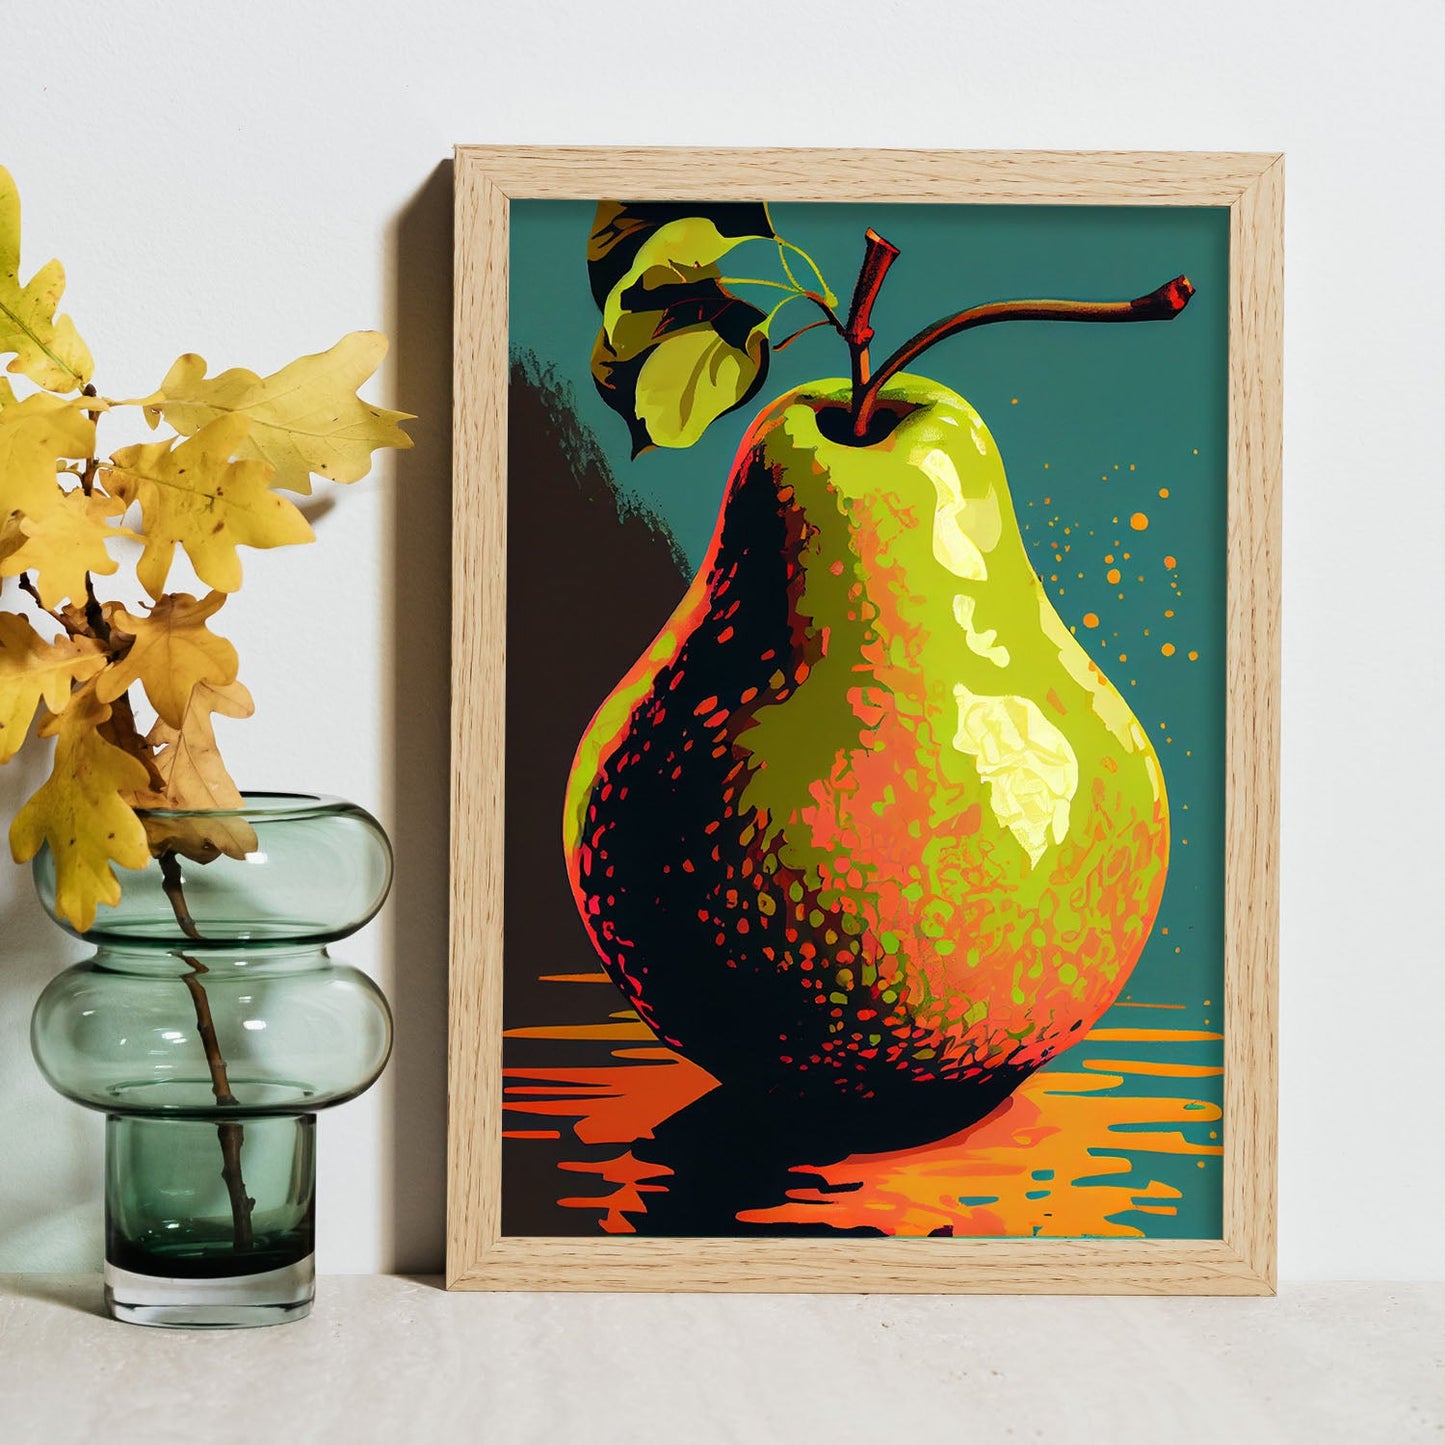 Nacnic Pear Pop Art_2. Aesthetic Wall Art Prints for Bedroom or Living Room Design.